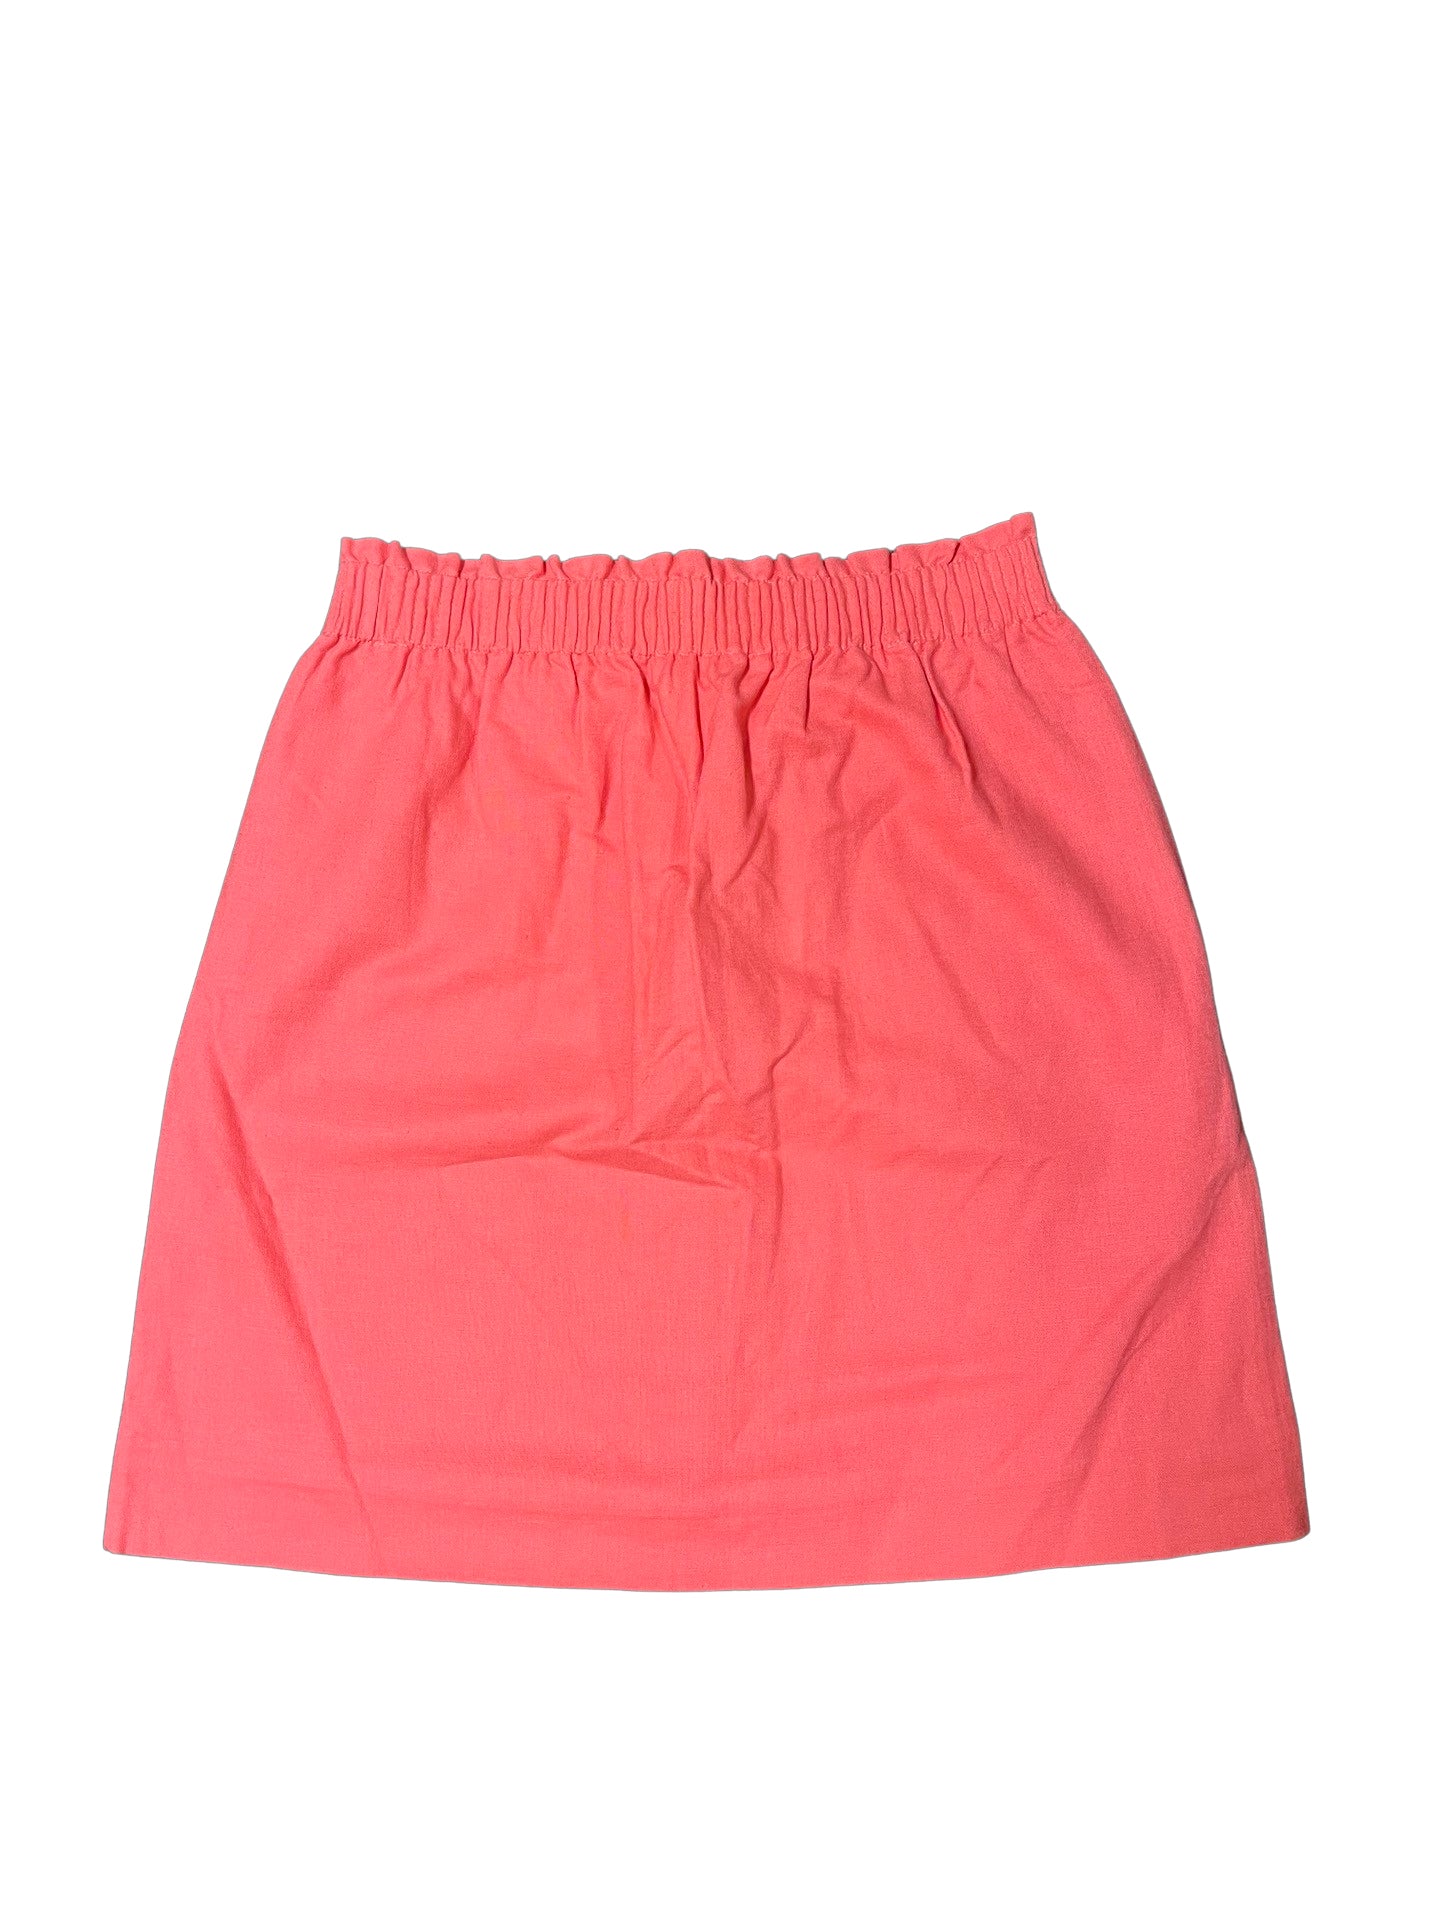 Size 2 J. Crew Skirt